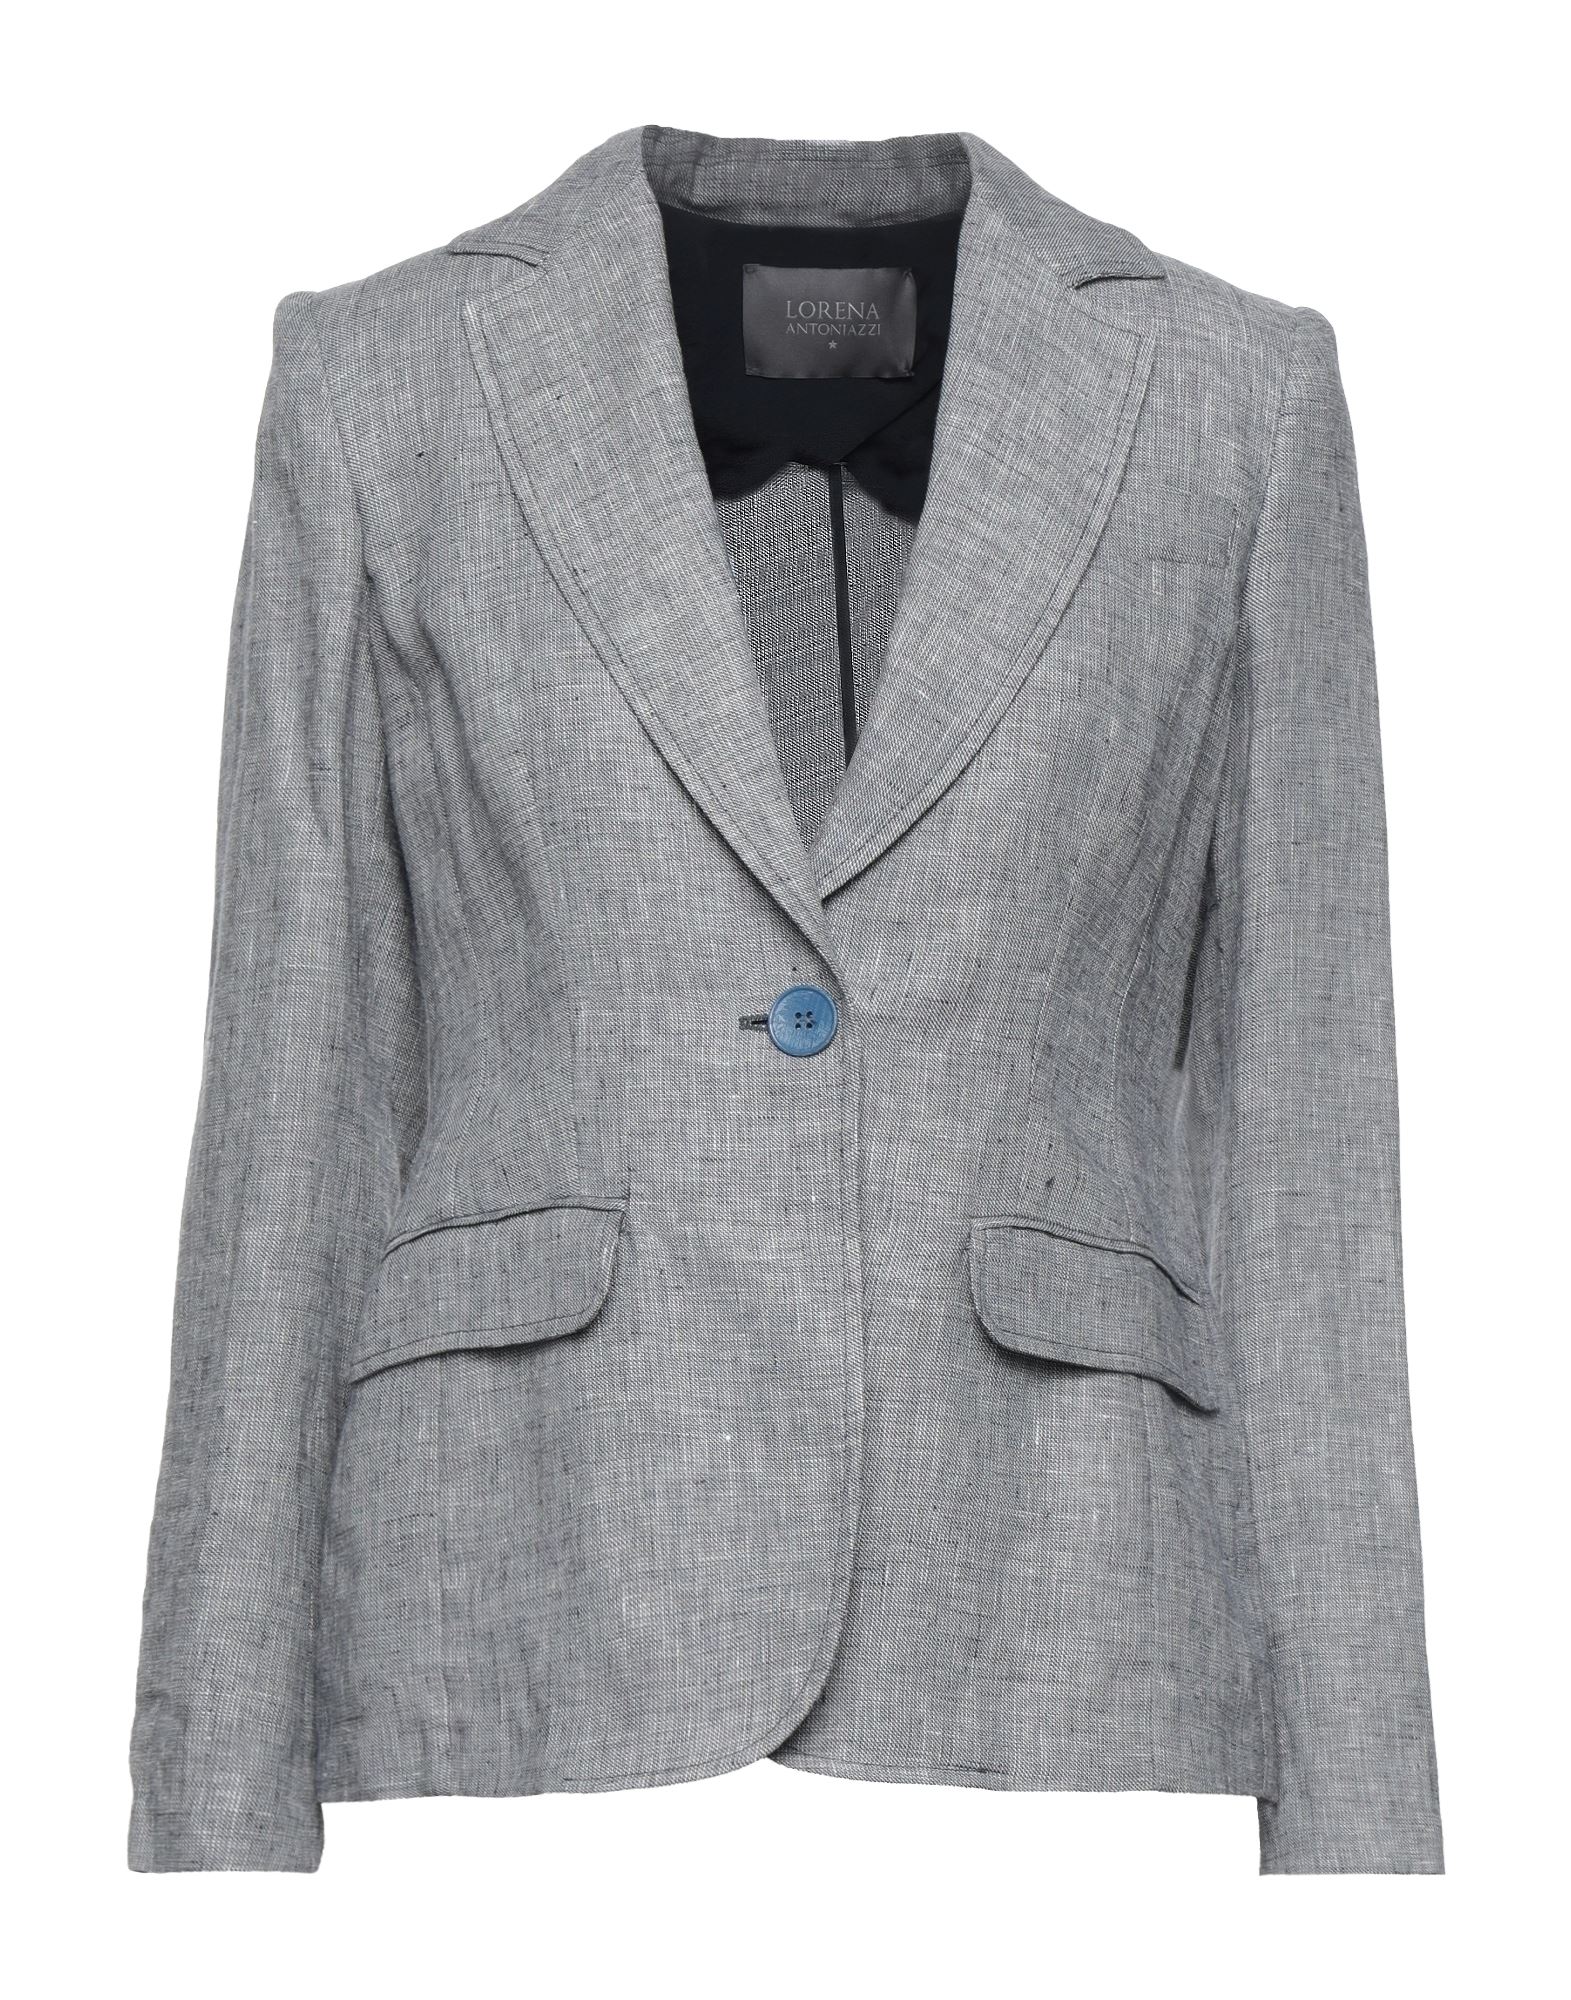 Lorena Antoniazzi Suit Jackets In Grey